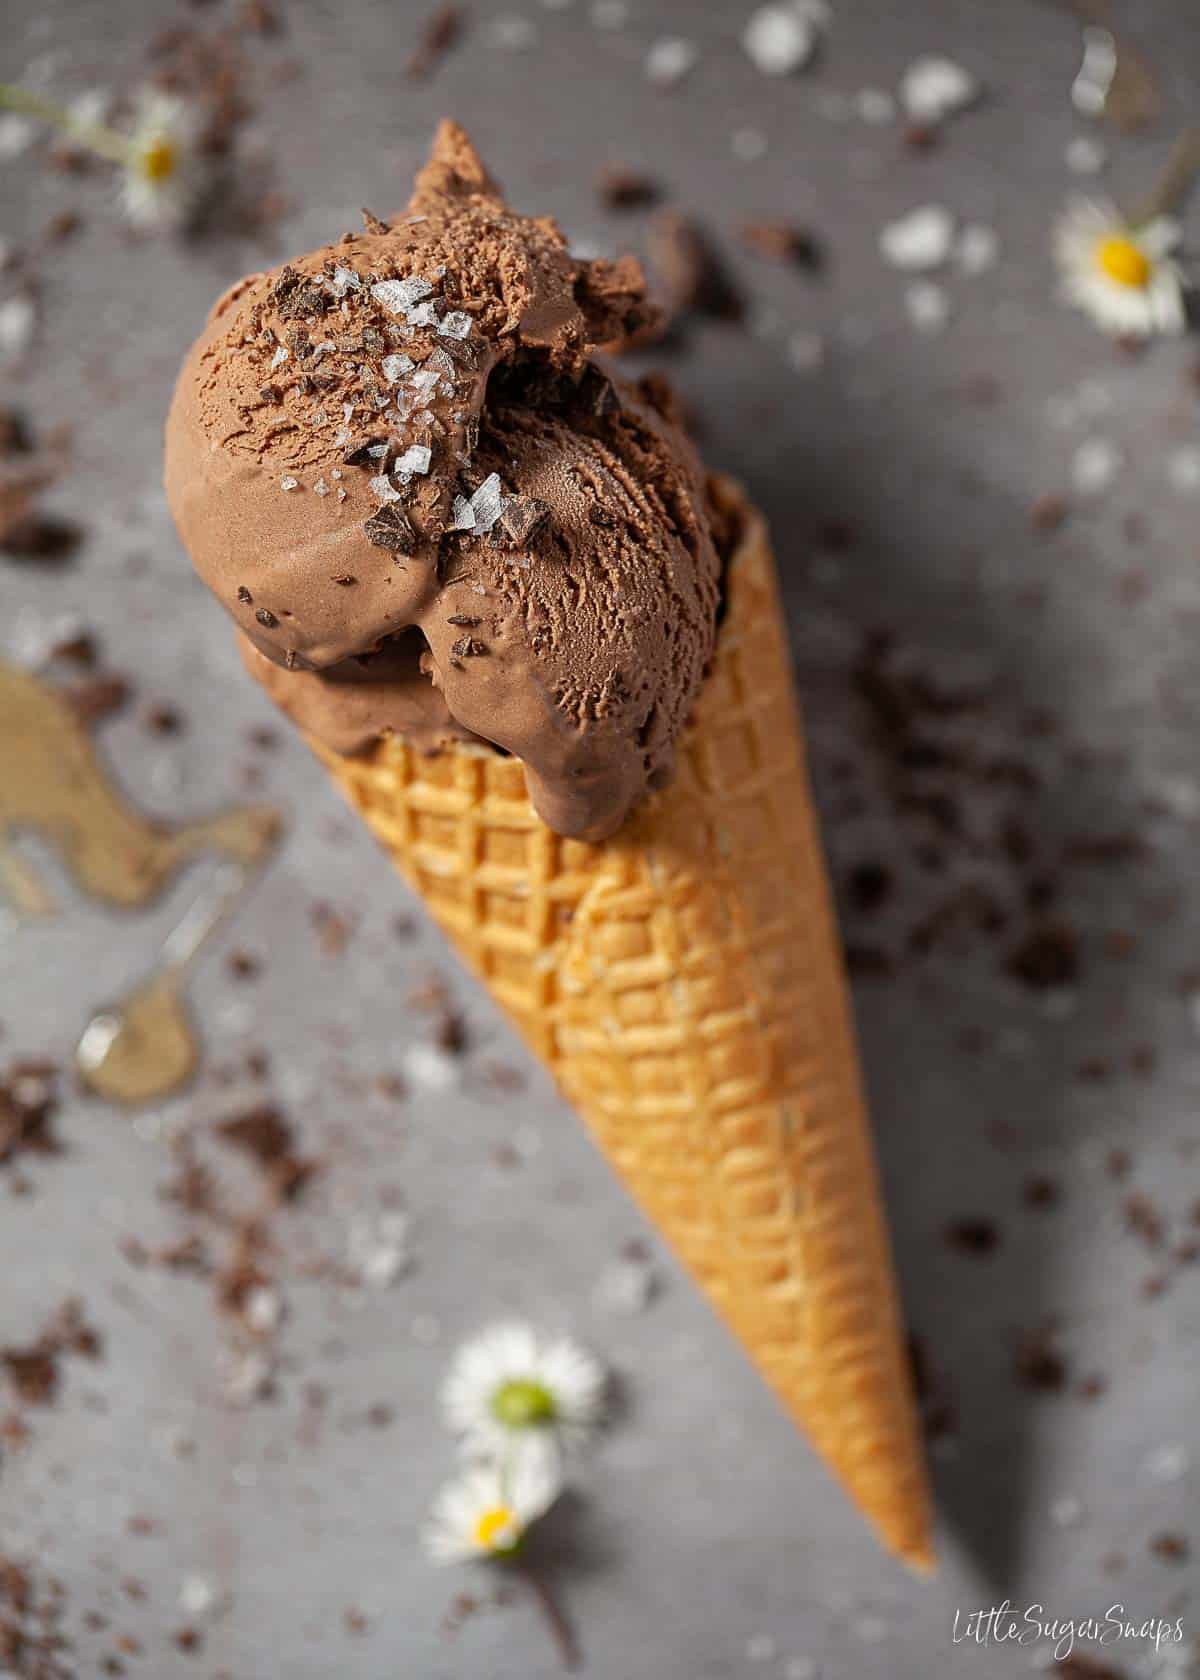 Dark chocolate ice cream in a waffle cone with sea salt and chopped chocolate.